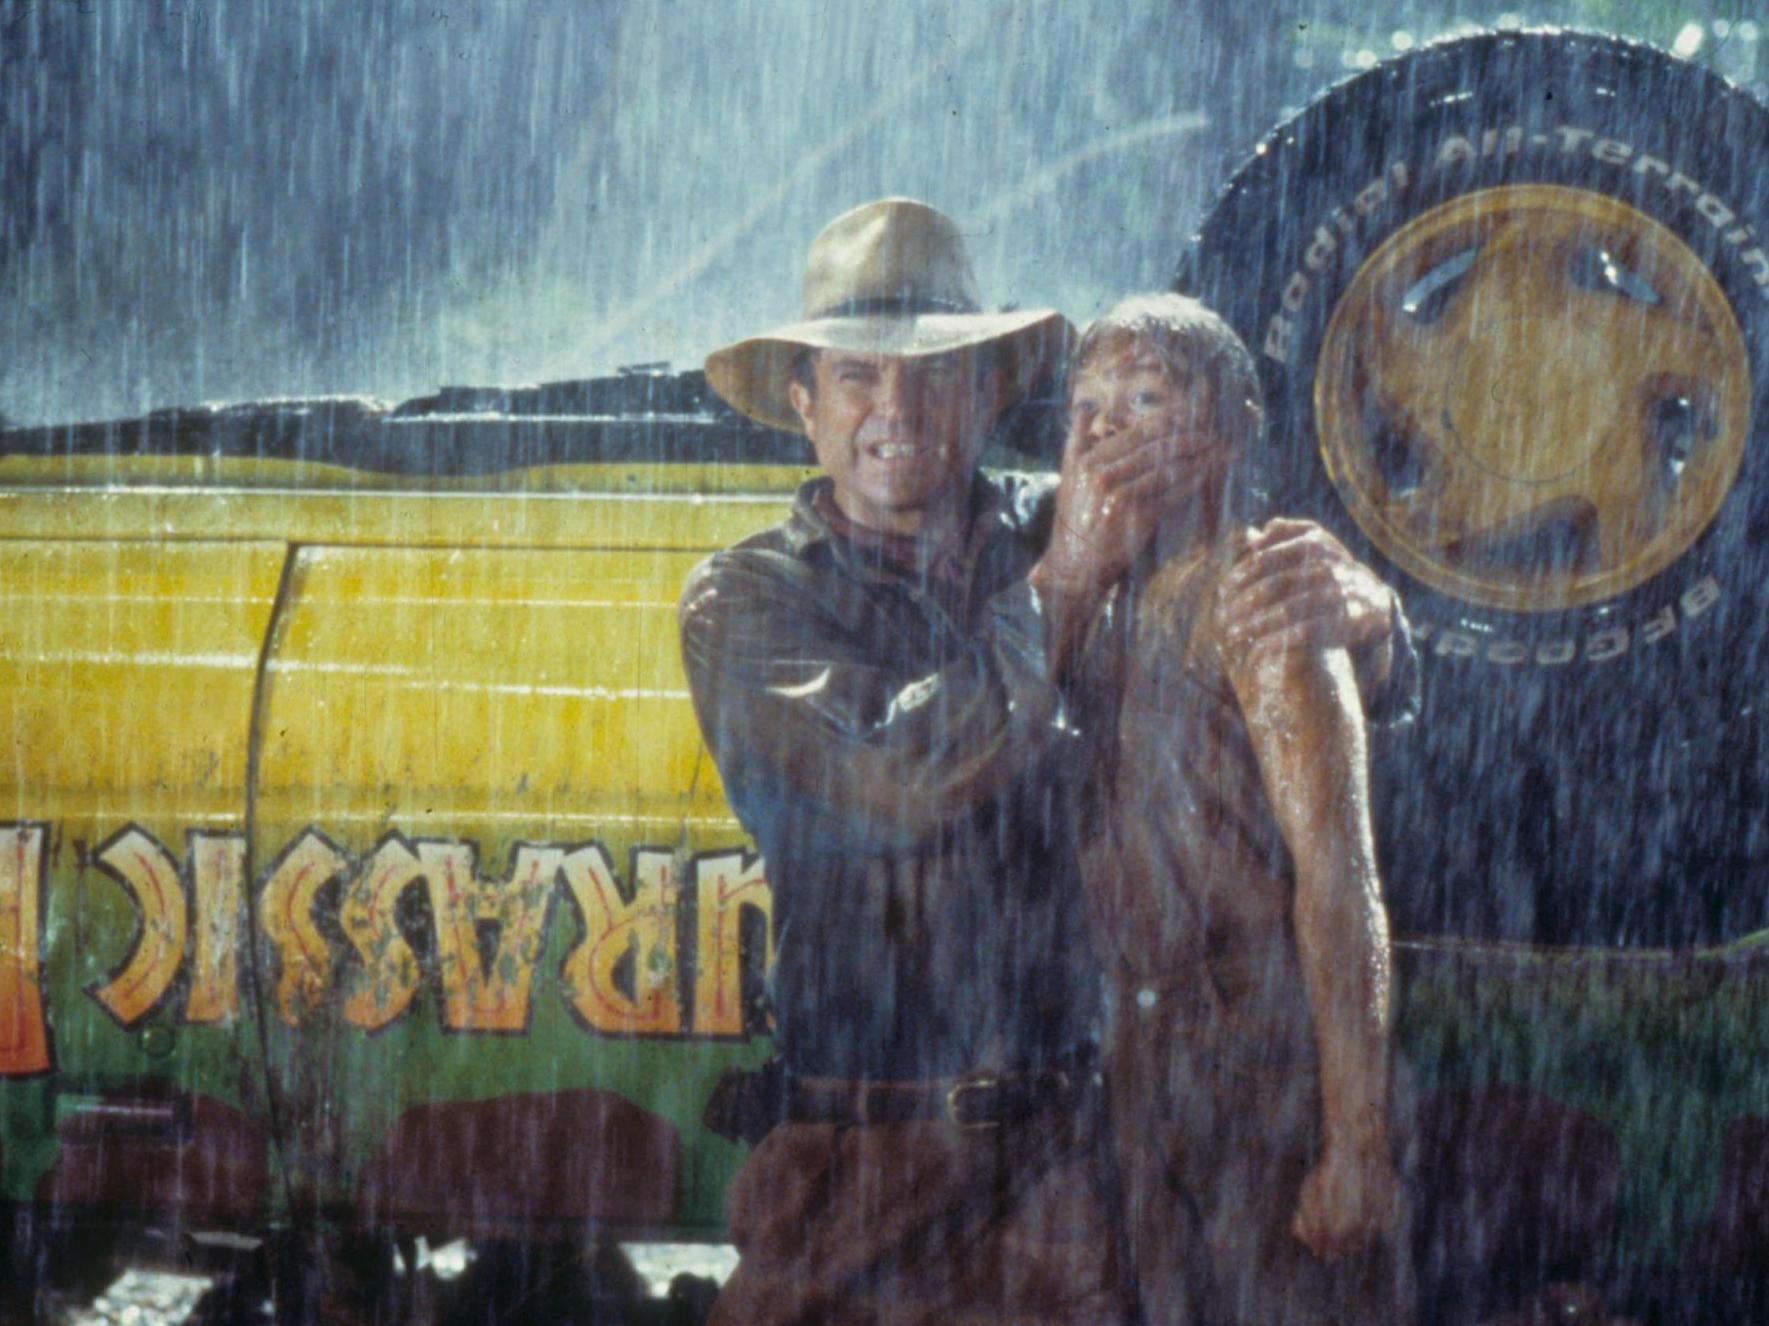 Jurassic World 3: Returning Jurassic Park actor Sam Neill says new film is 'best yet'